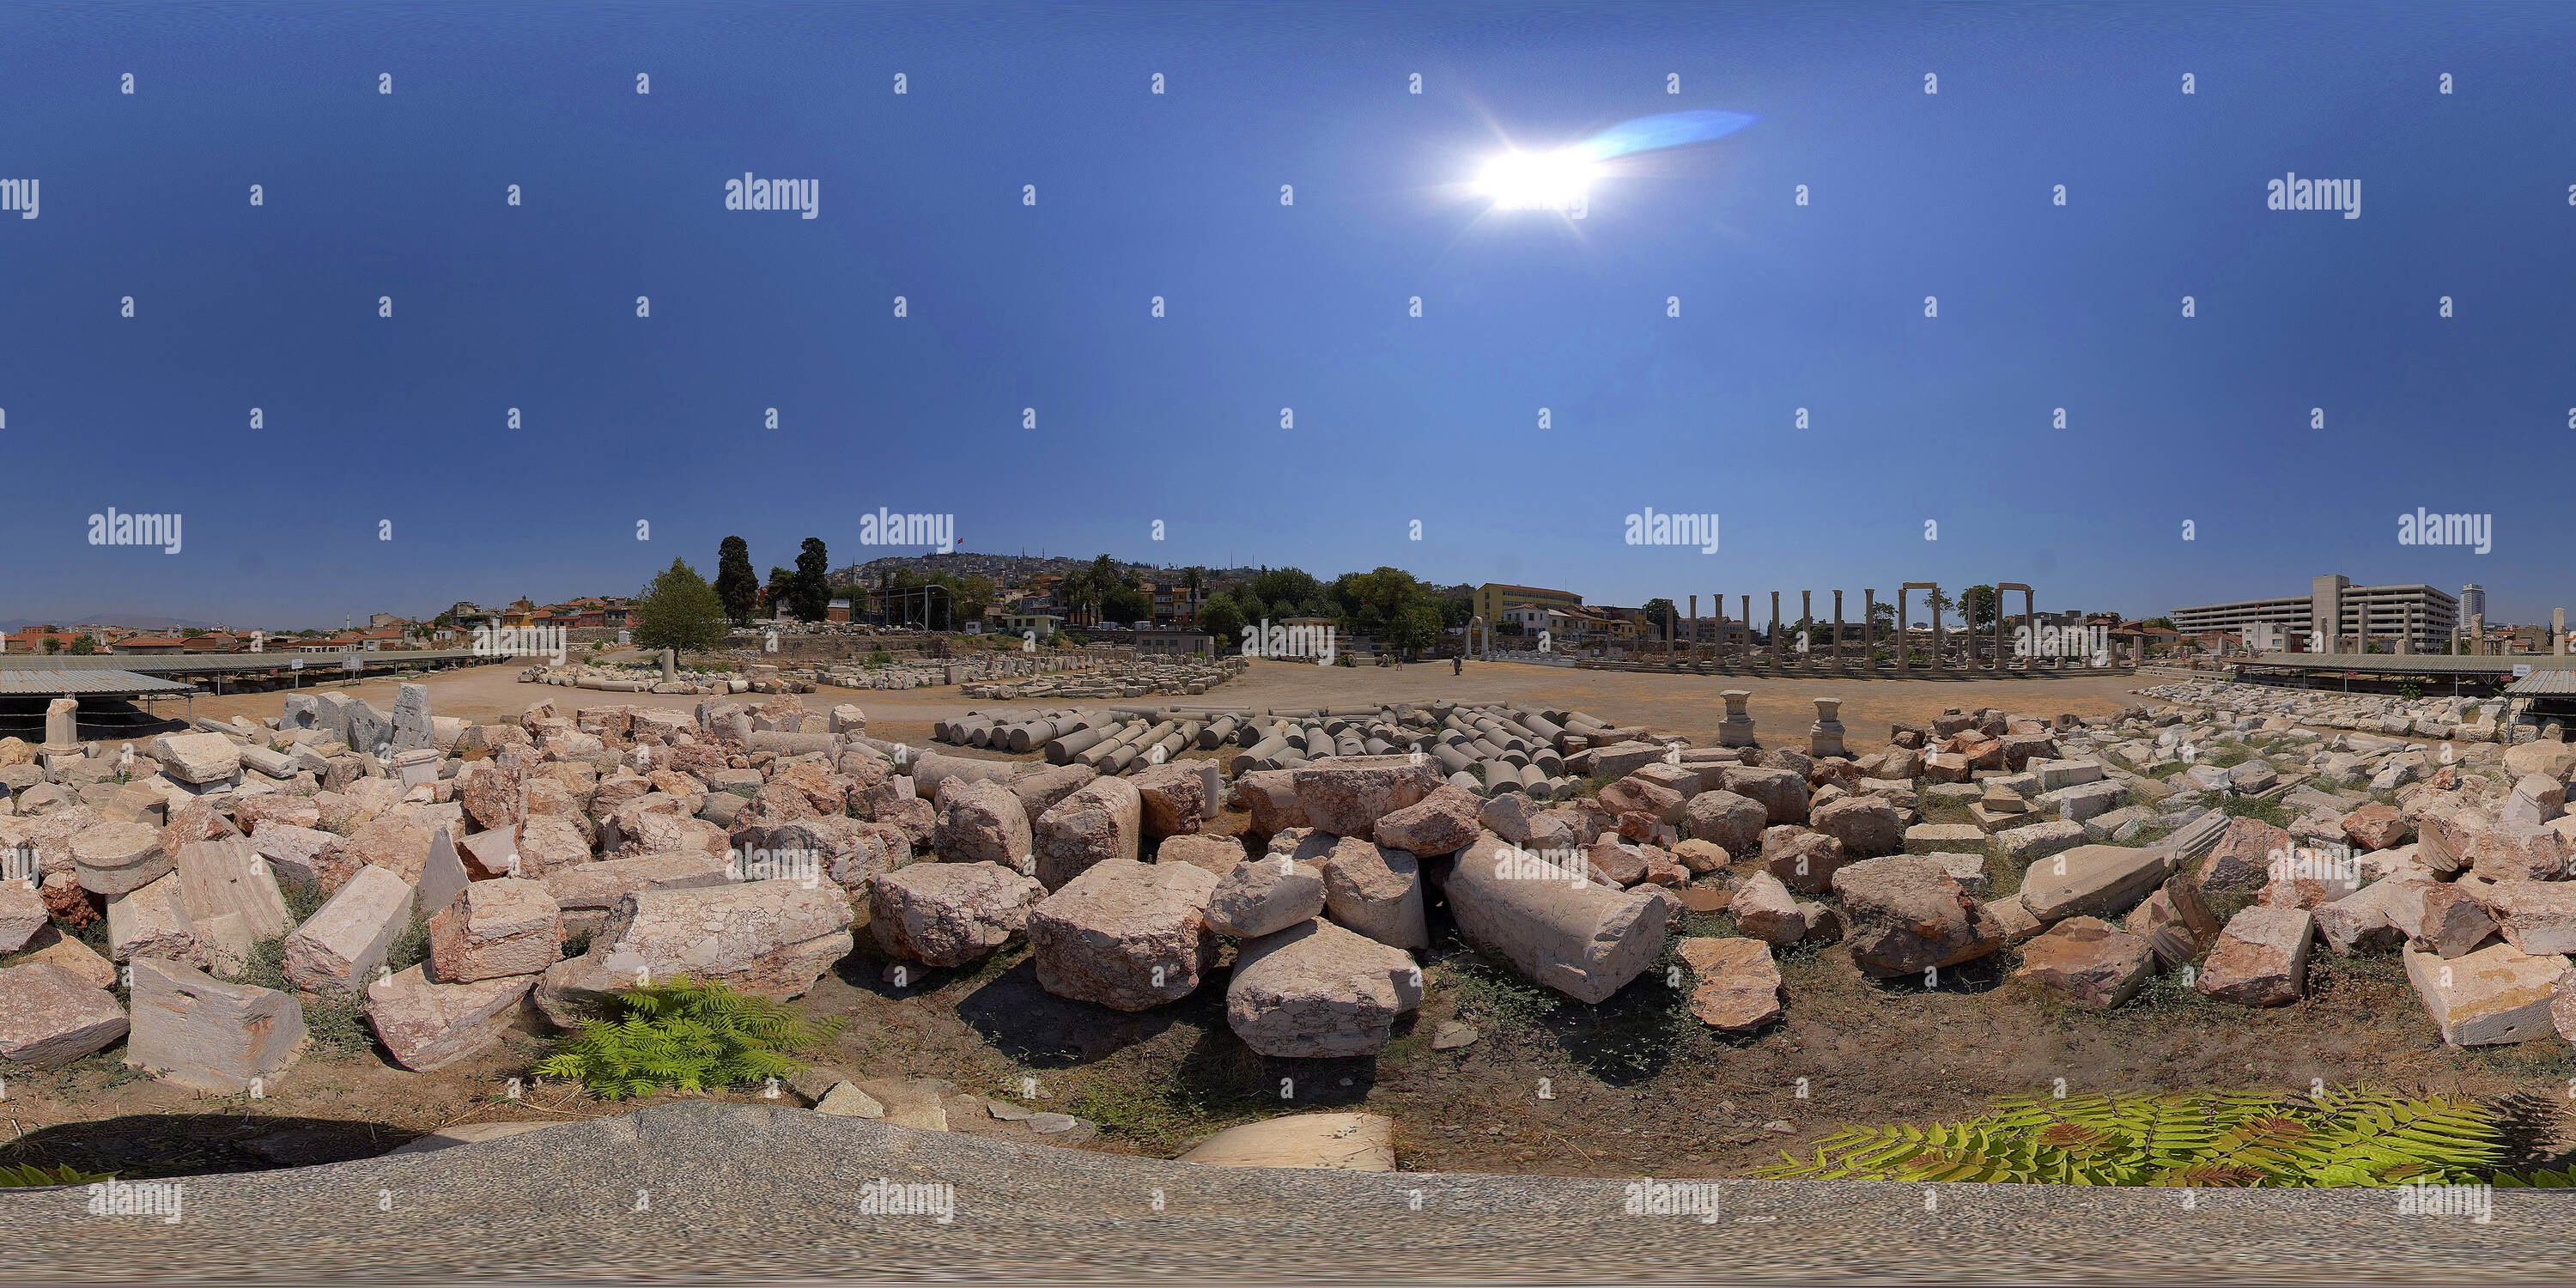 Vista panorámica en 360 grados de Izmir Agora campo de desechos 1